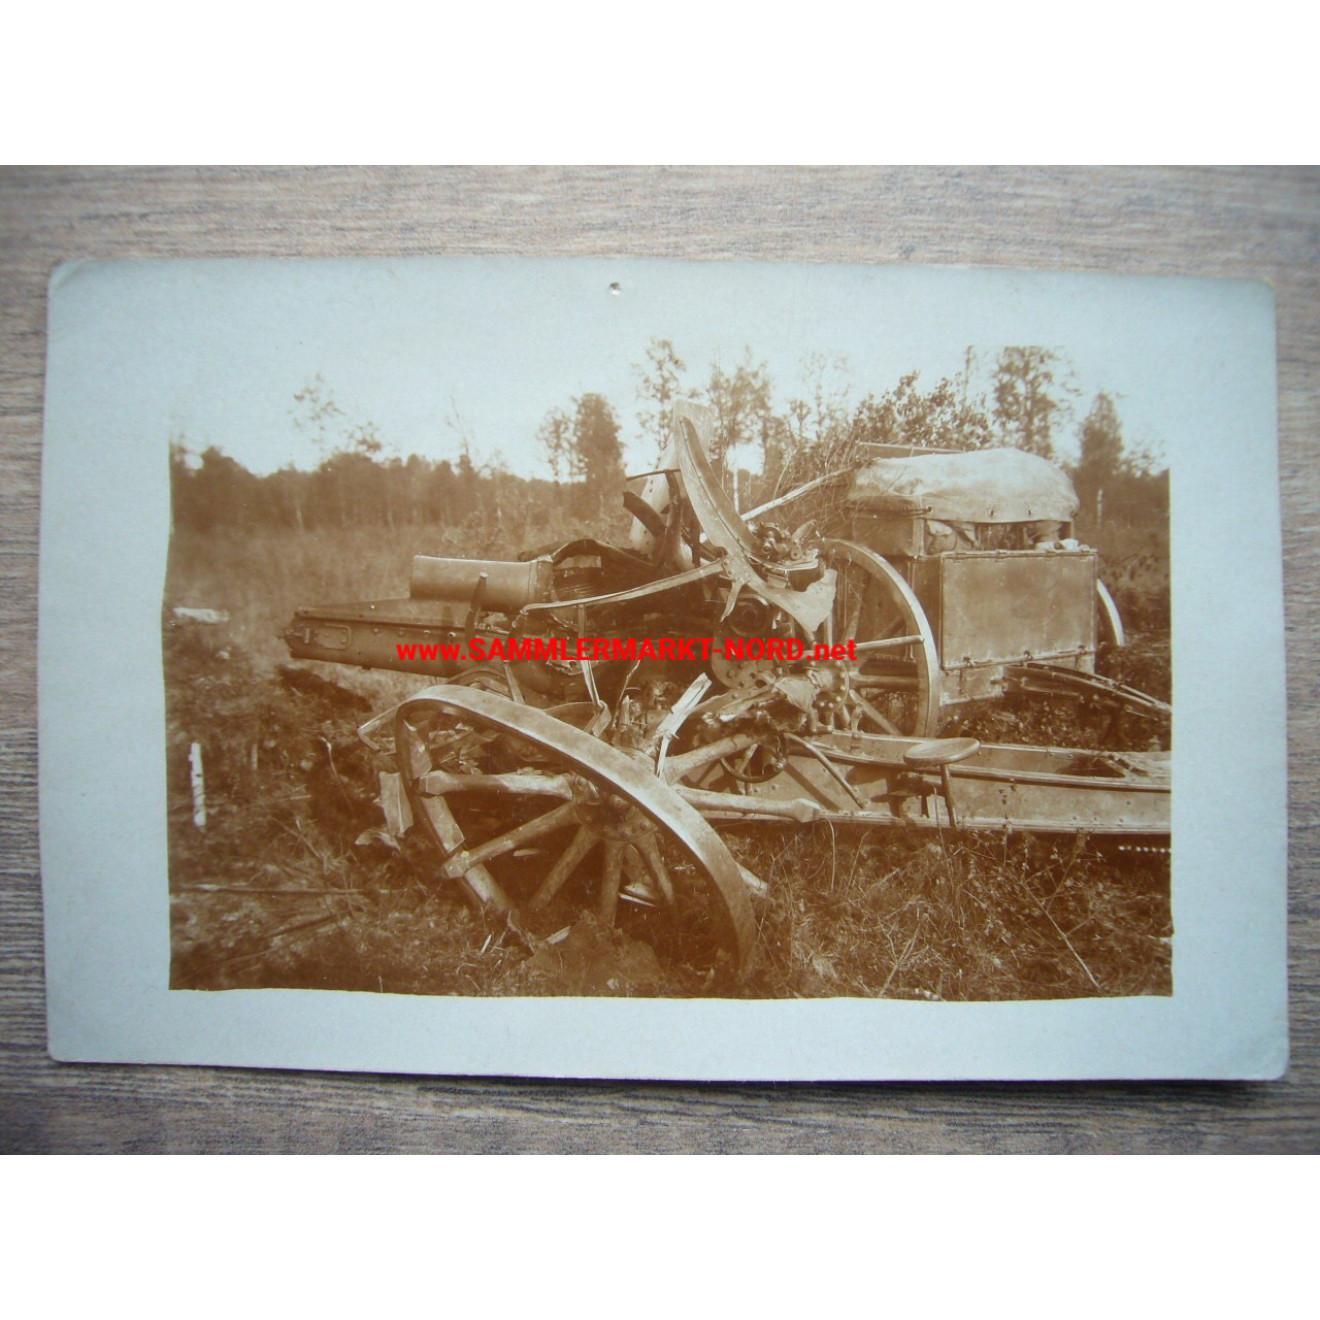 Photo - destroyed field gun and ammunition cart